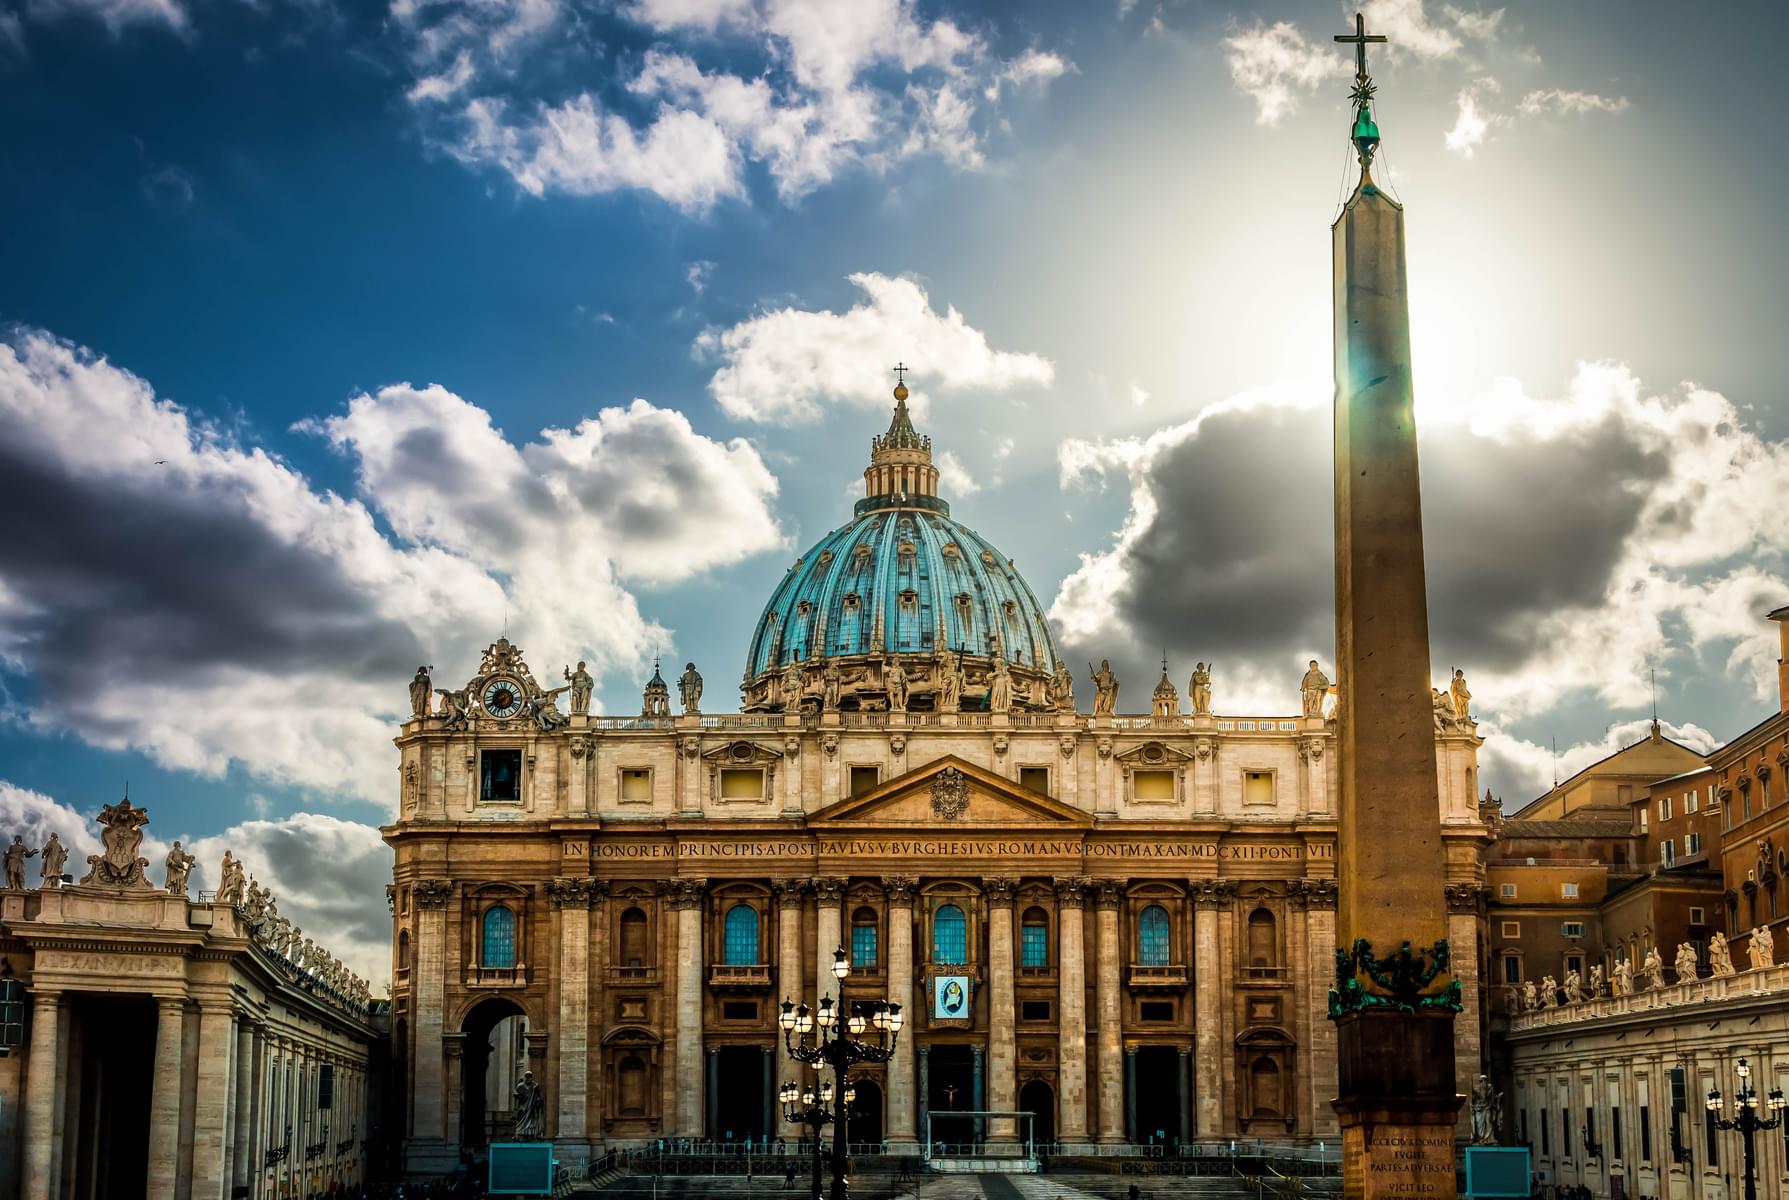 Admire St. Peter’s Basilica